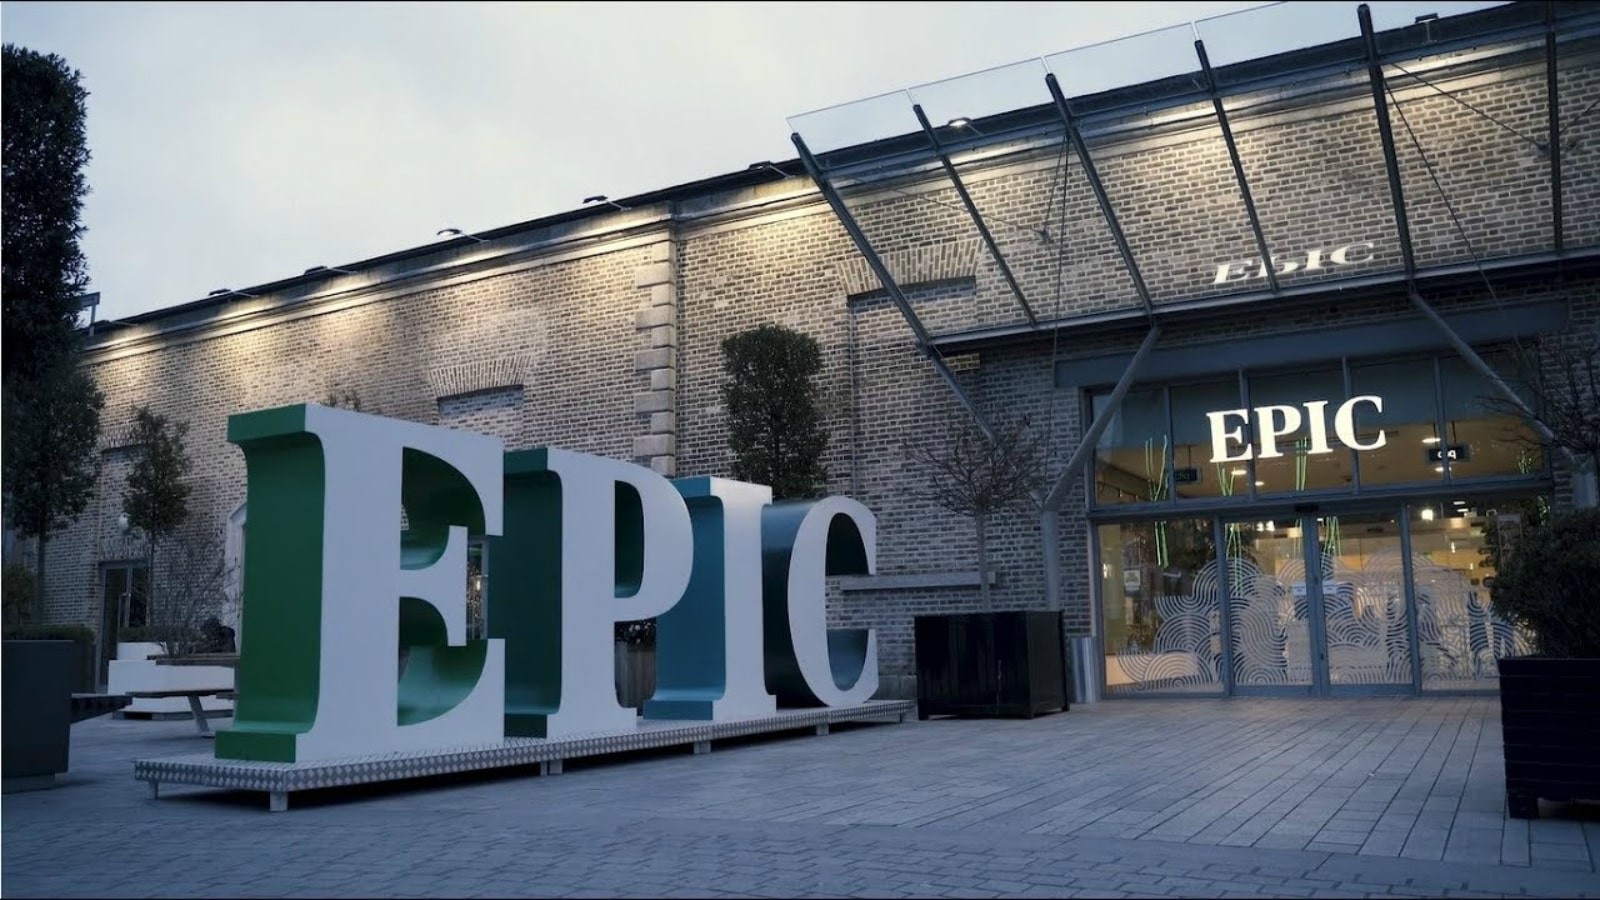 LOCAL ATTRACTIONS #12: EPIC THE IRISH EMIGRATION MUSEUM